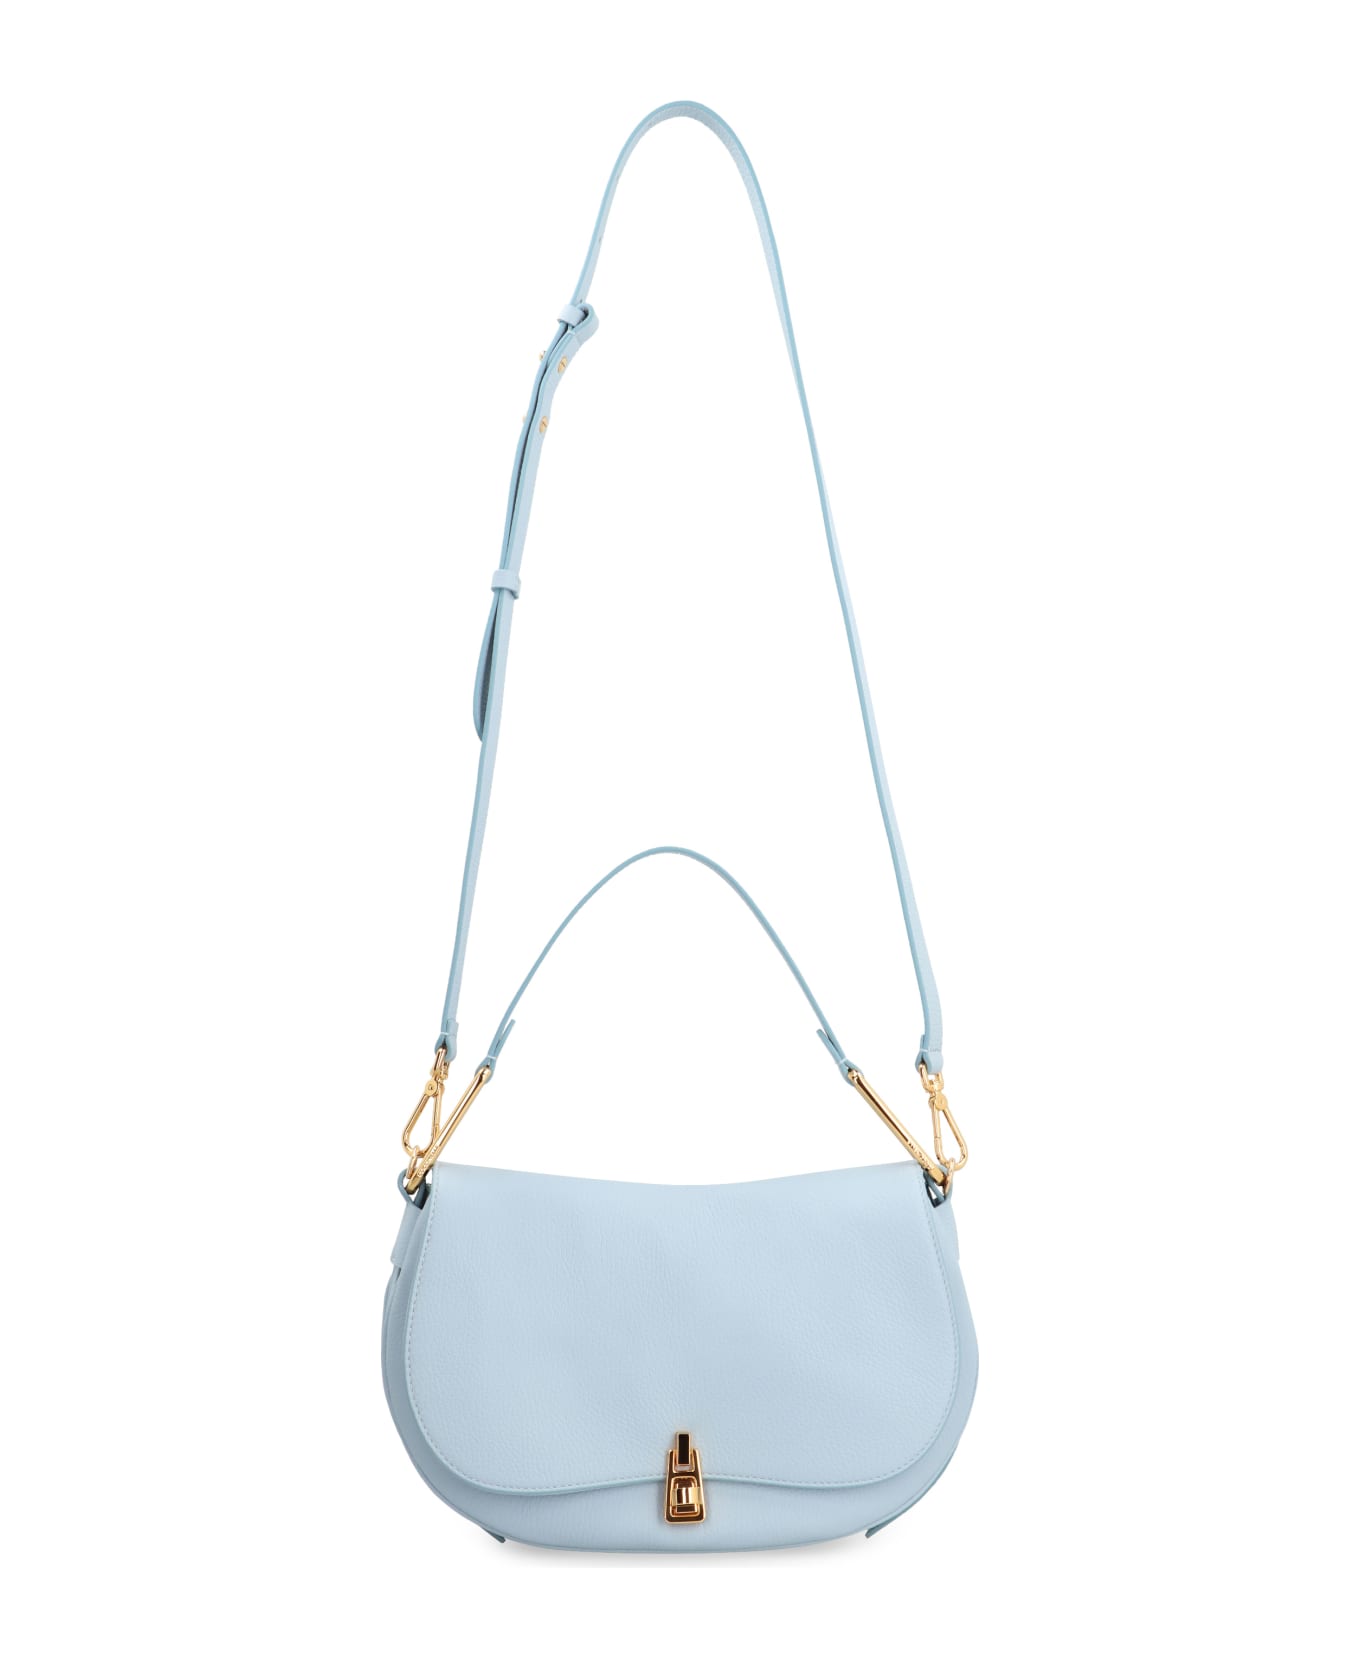 Coccinelle Magie Soft Leather Handbag - Light Blue トートバッグ